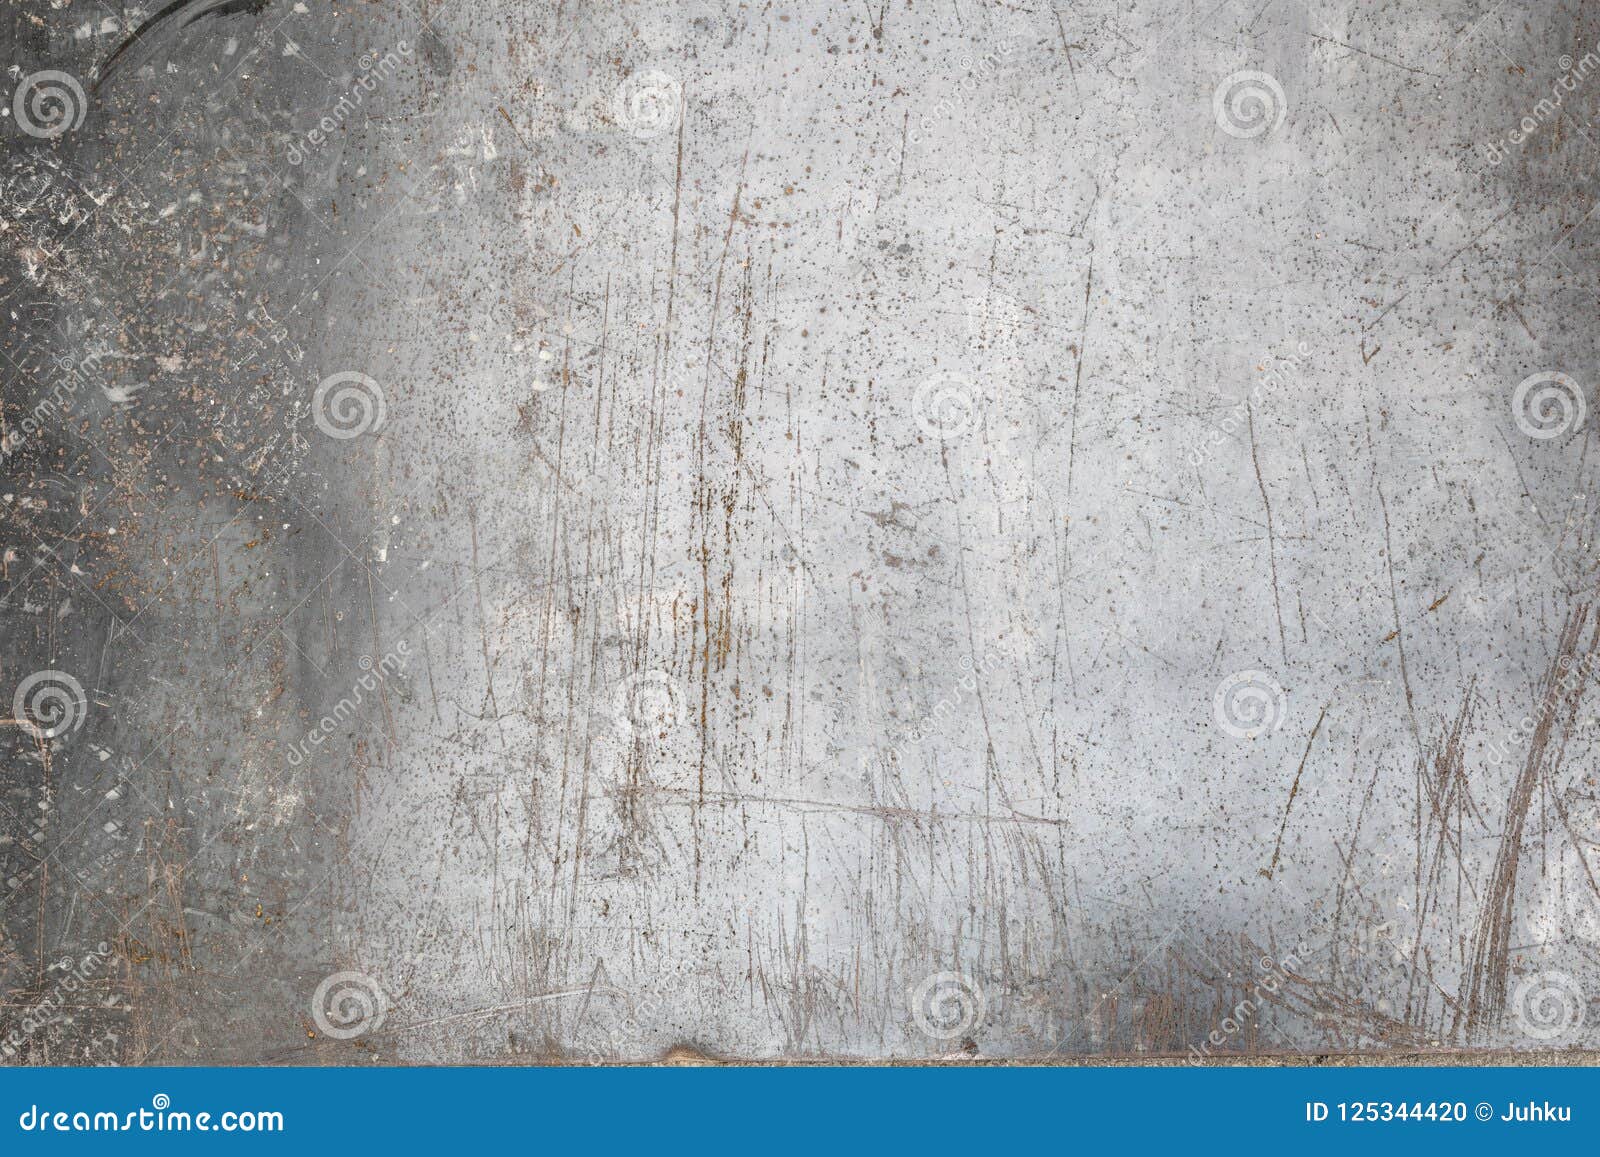 Worn Metal Sheet Floor Texture Stock Photo Image of surface, grunge 125344420